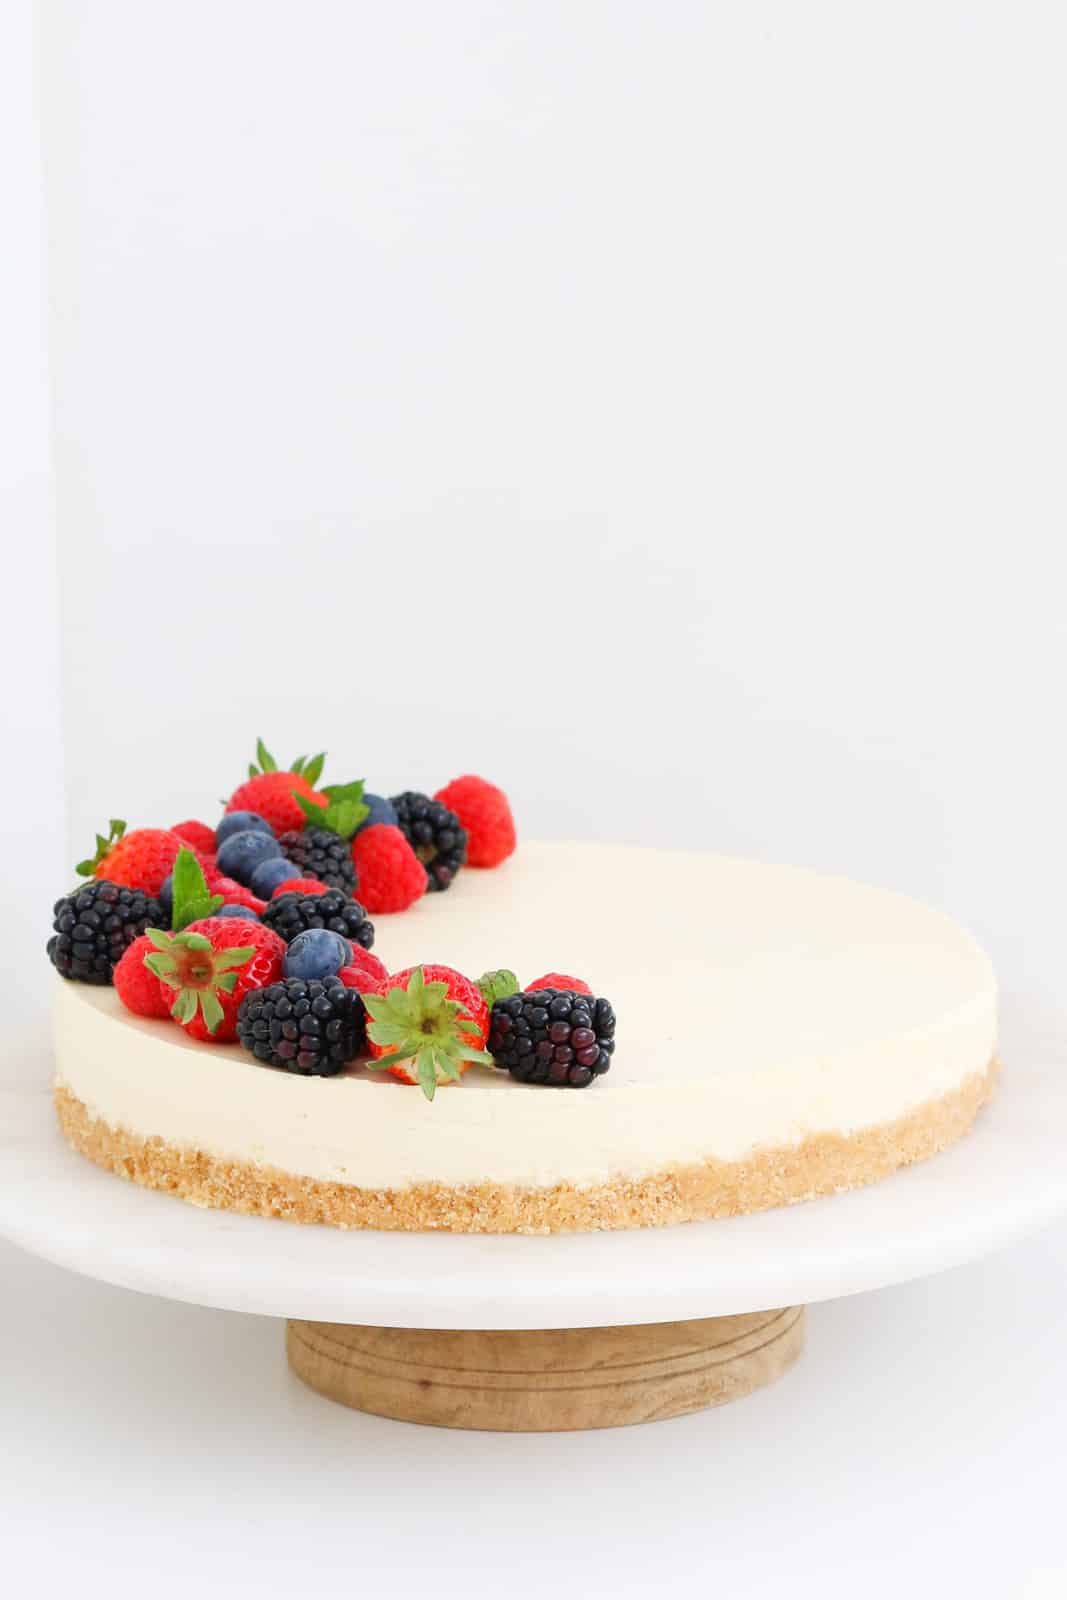 A no bake lemon cheesecake on a cake stand.